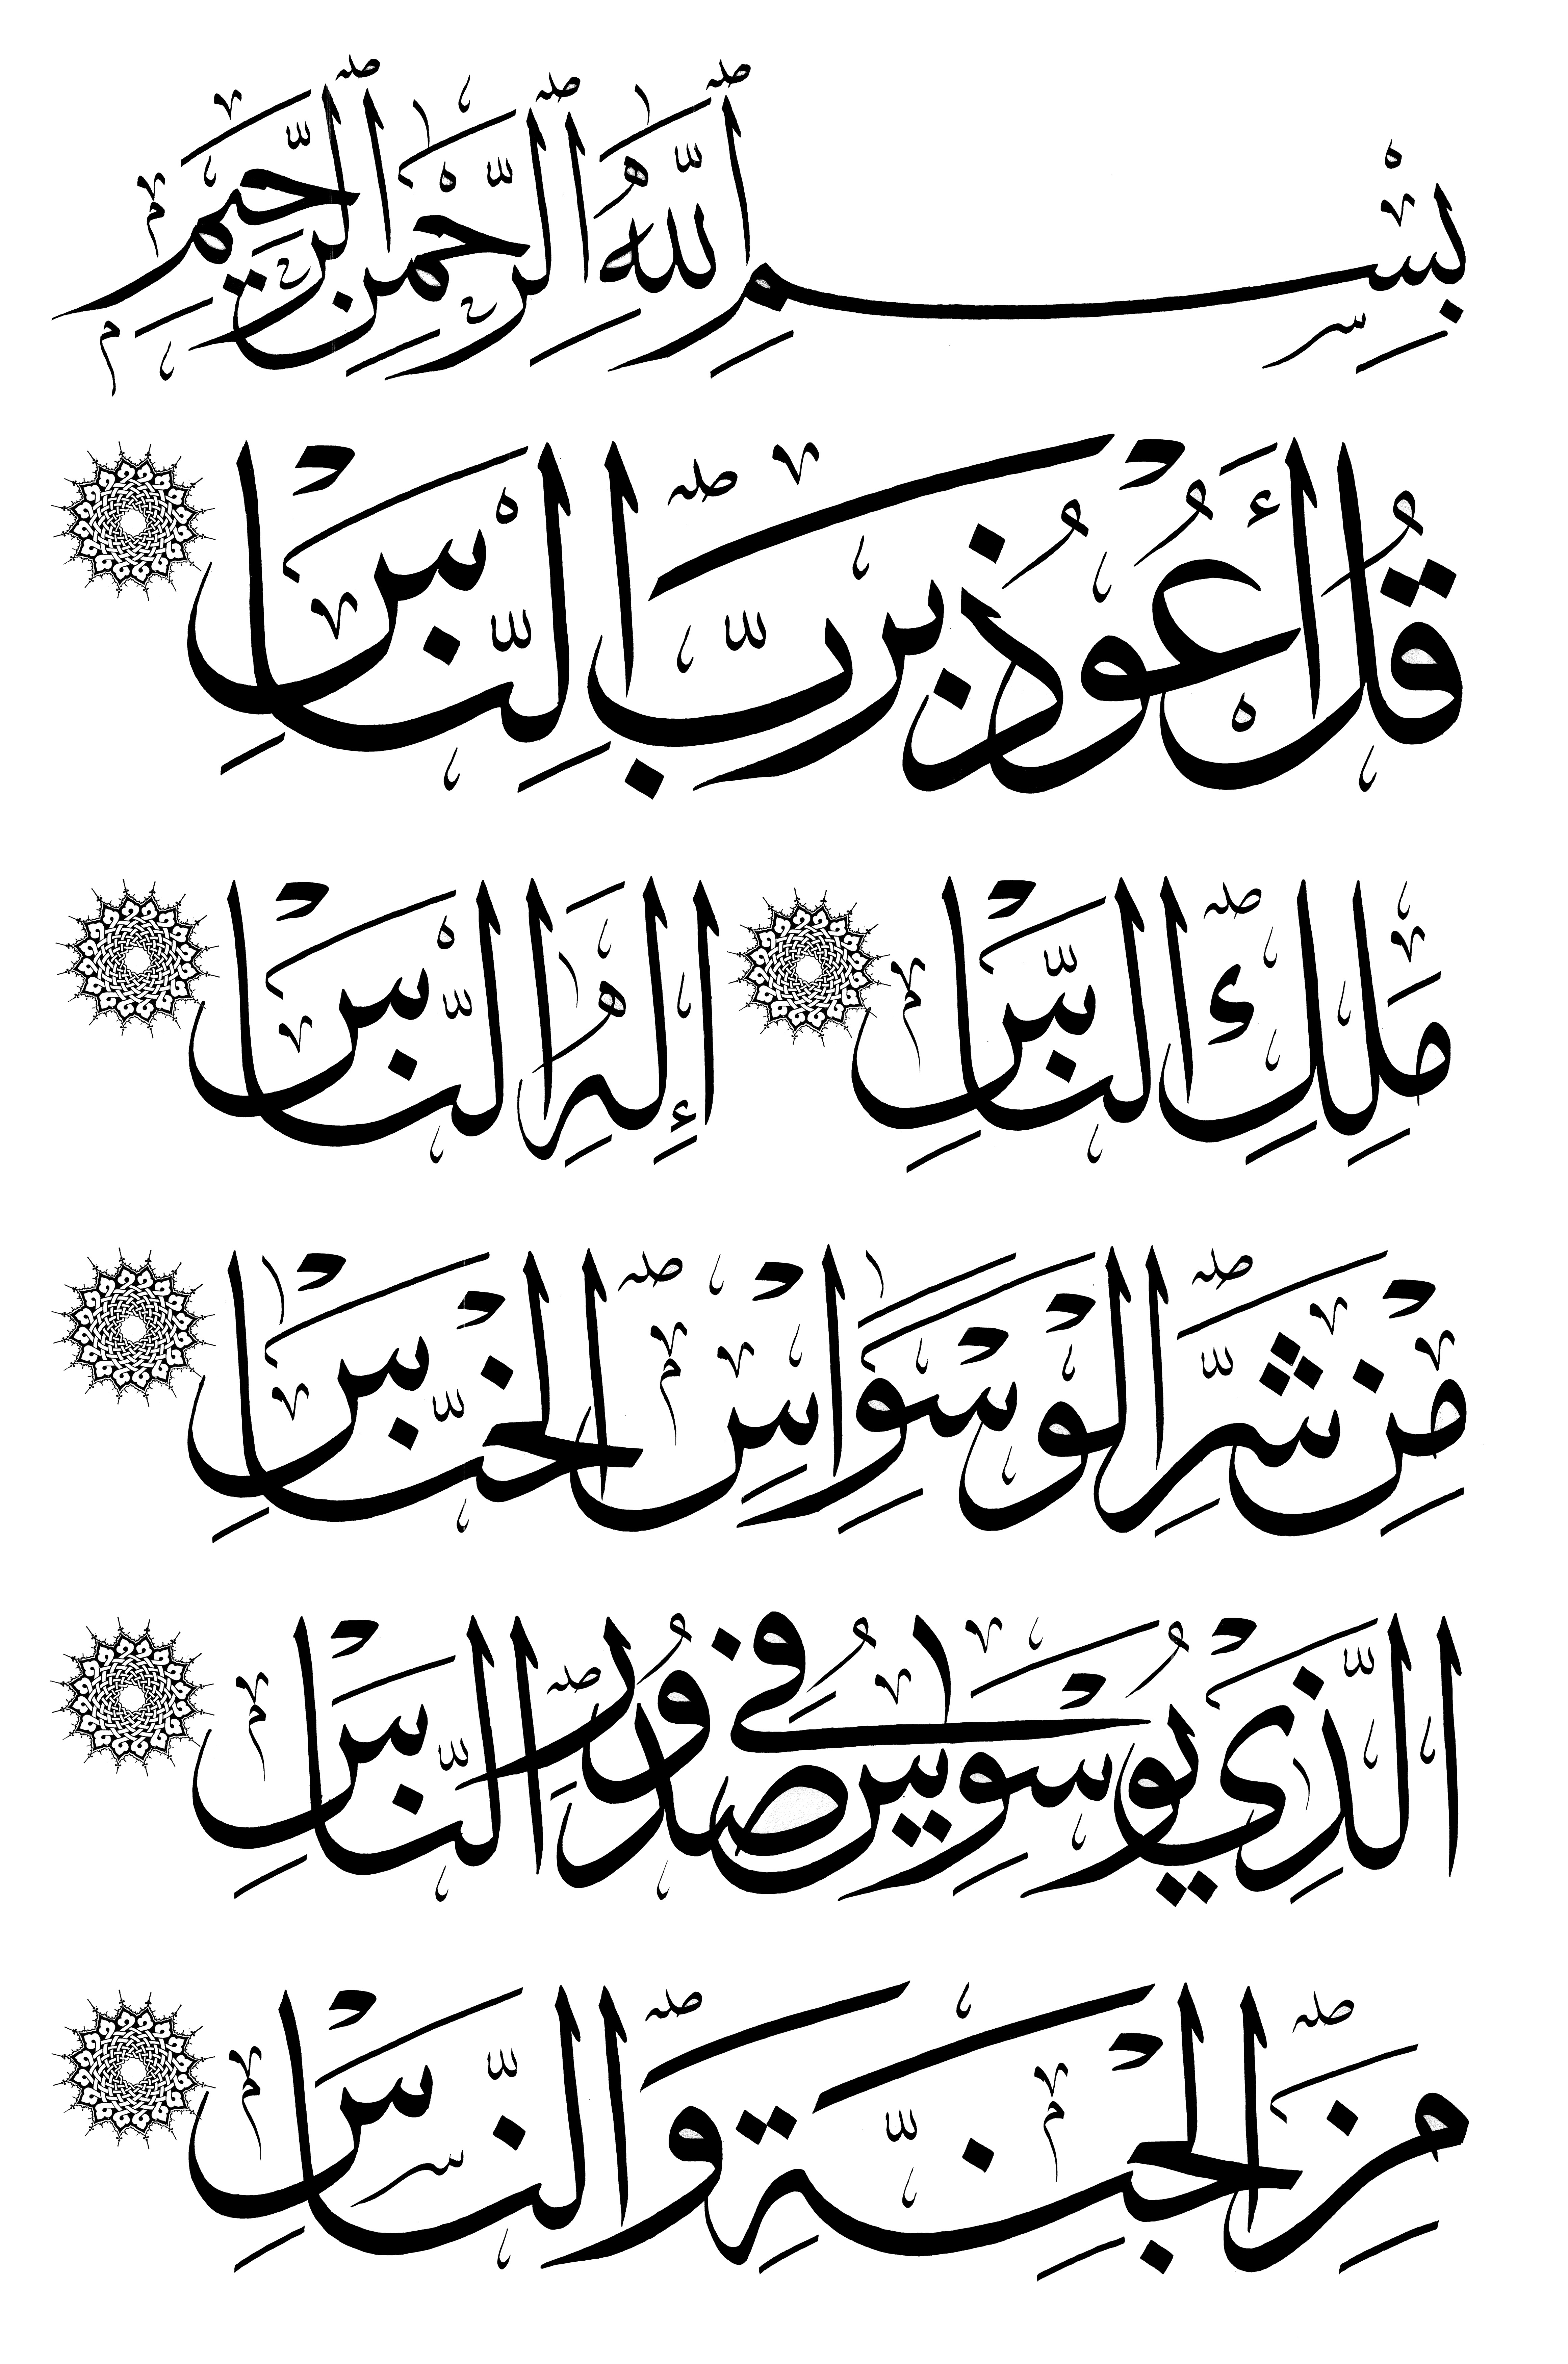 ayat al kursi word by word translation